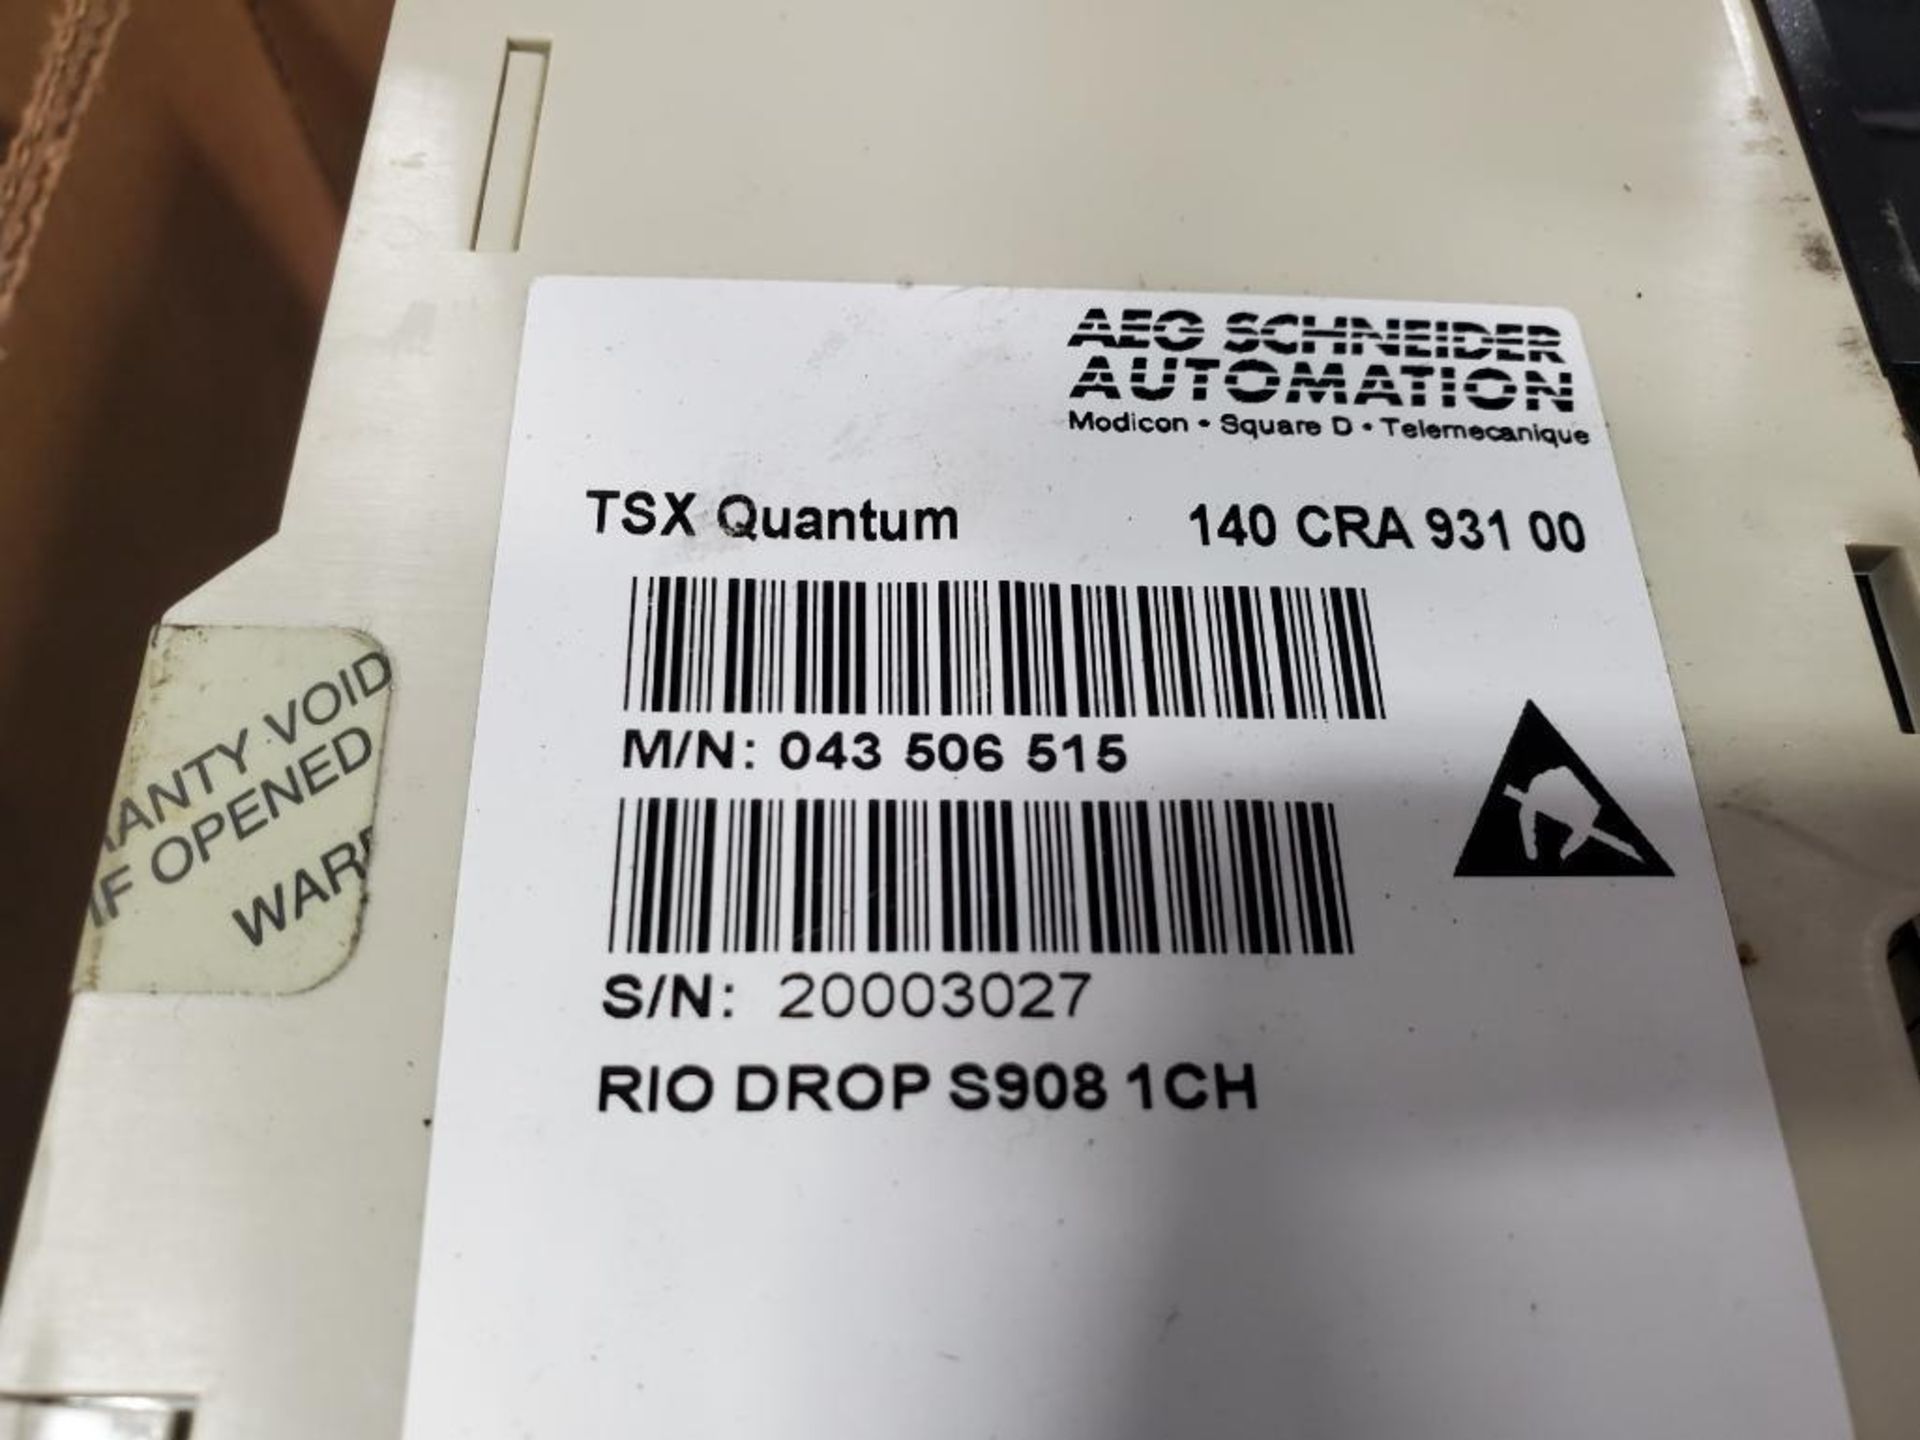 Qty 2 - AEG Schneider Automation CRA93100 RIO DROP module. TSX Quantum 140CRA93100. - Image 4 of 4